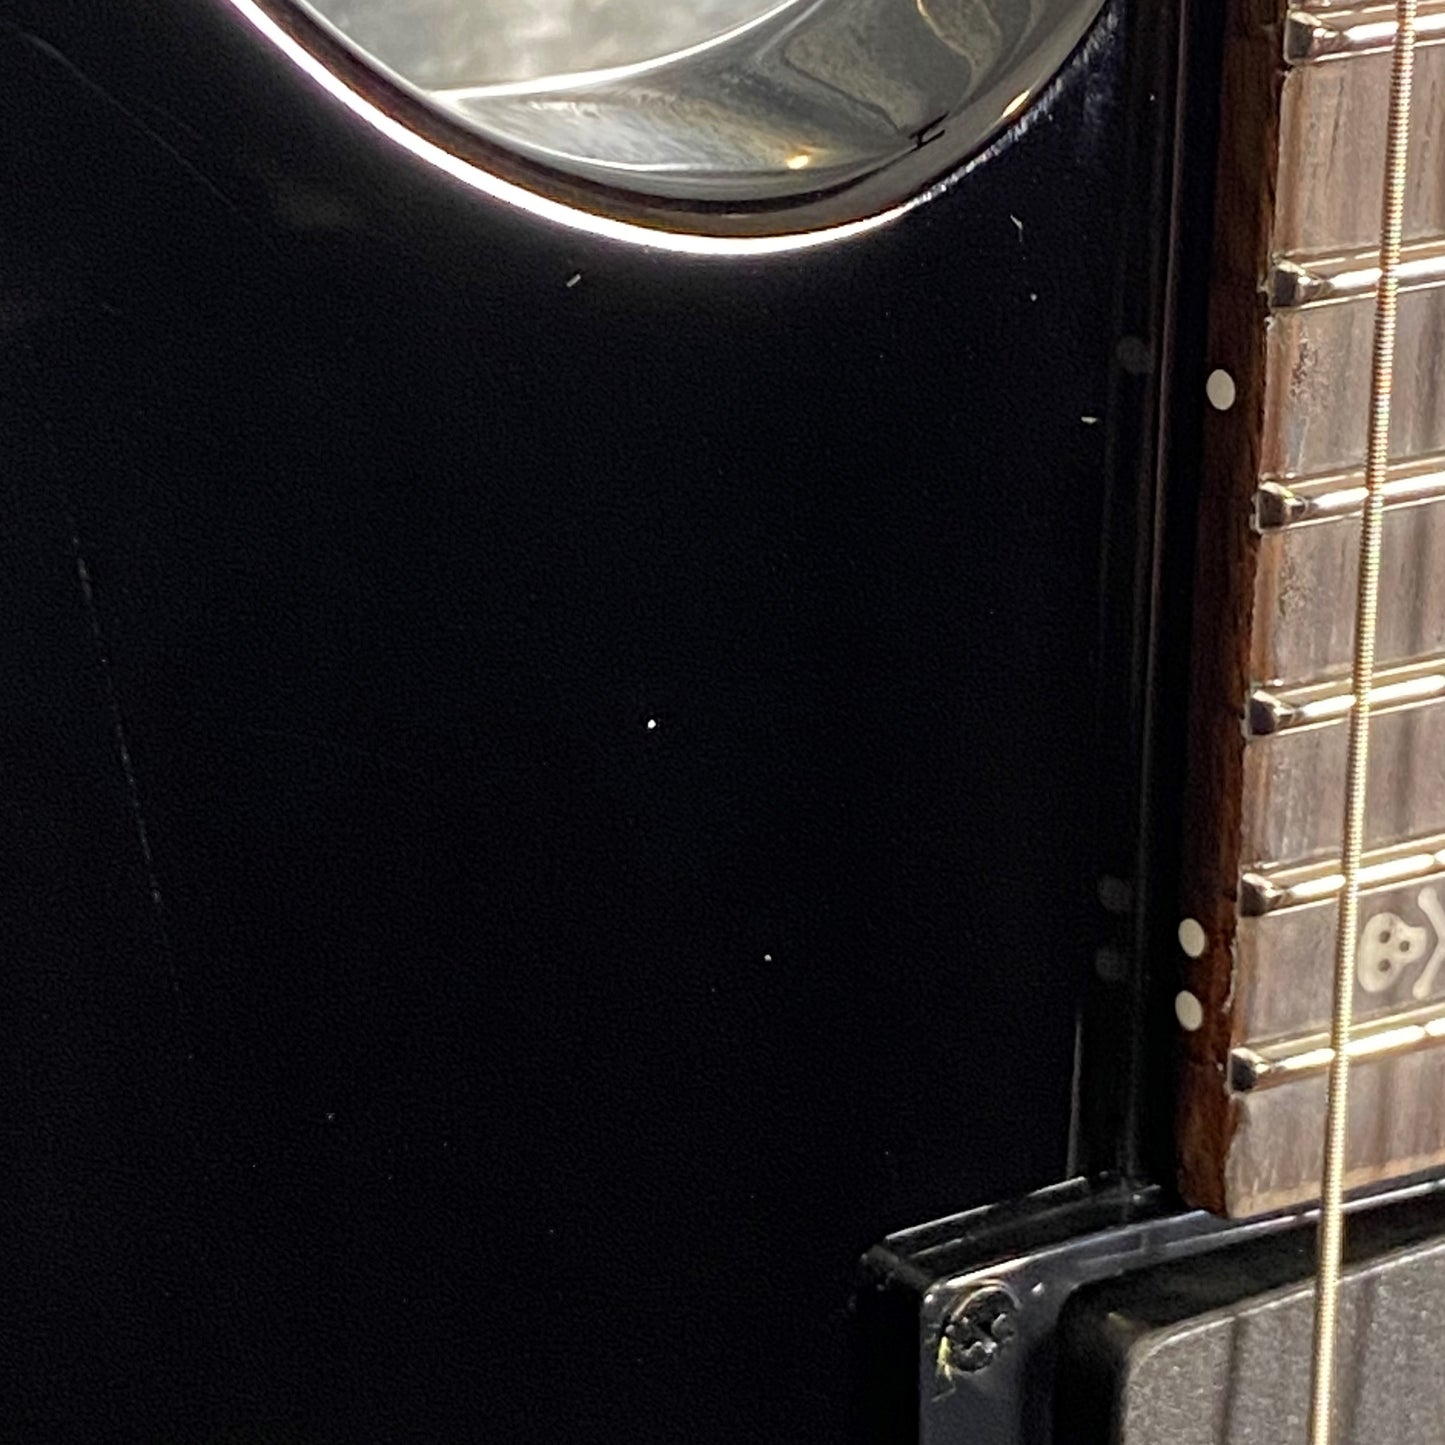 ESP LTD KH-602 Kirk Hammett Black Guitar & Case LKH602 #1599 Used